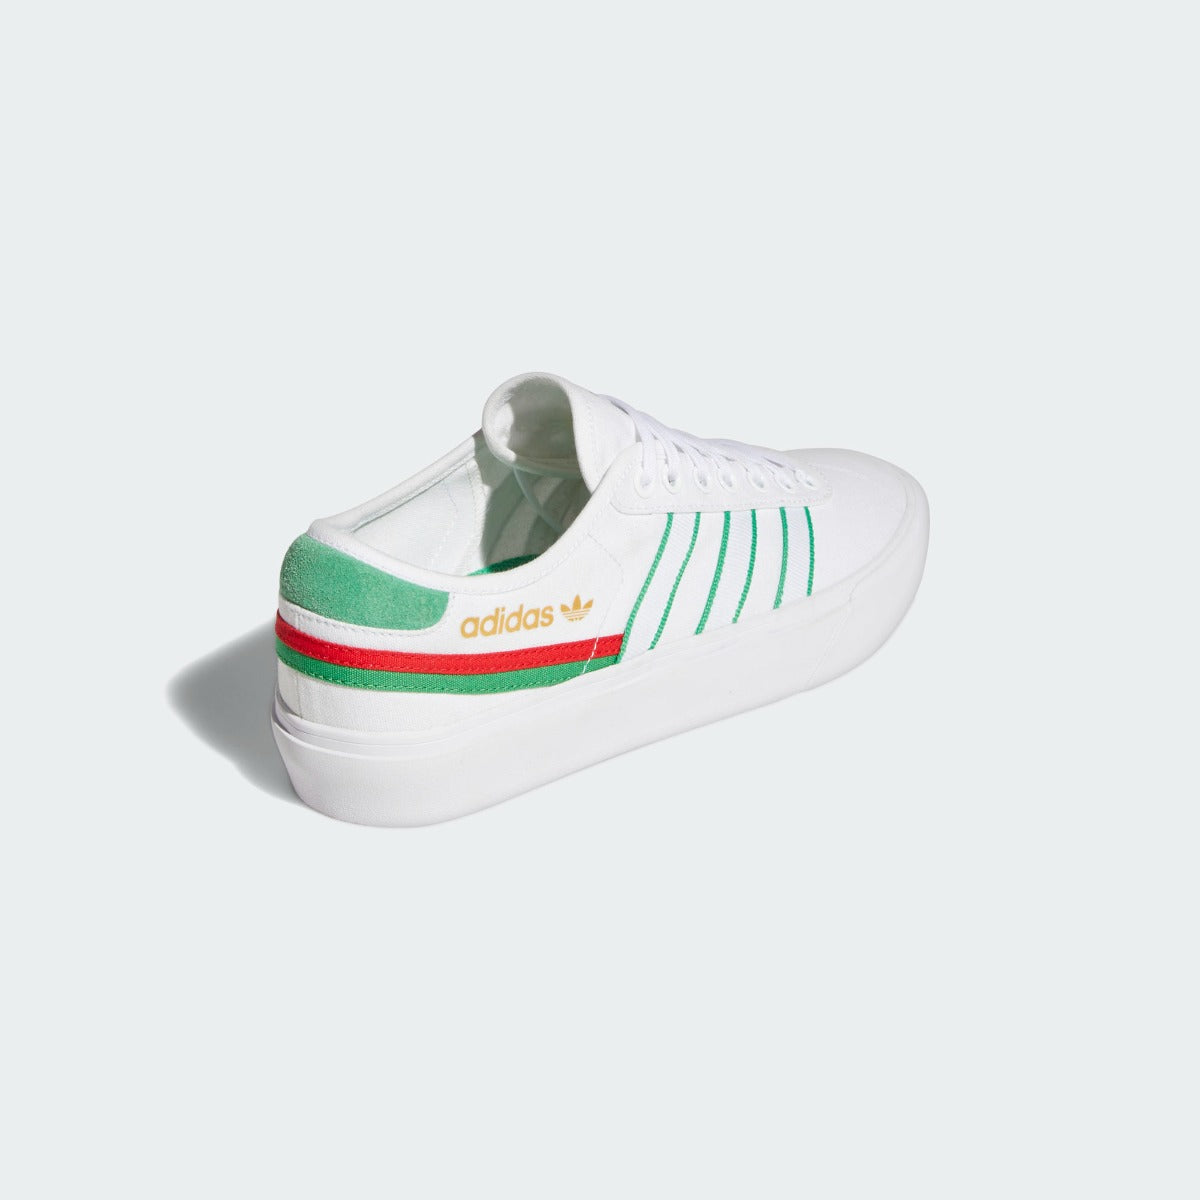 Adidas DELPALA x FMF Skate-Inspired Shoes - White-Green (Diagonal 2)